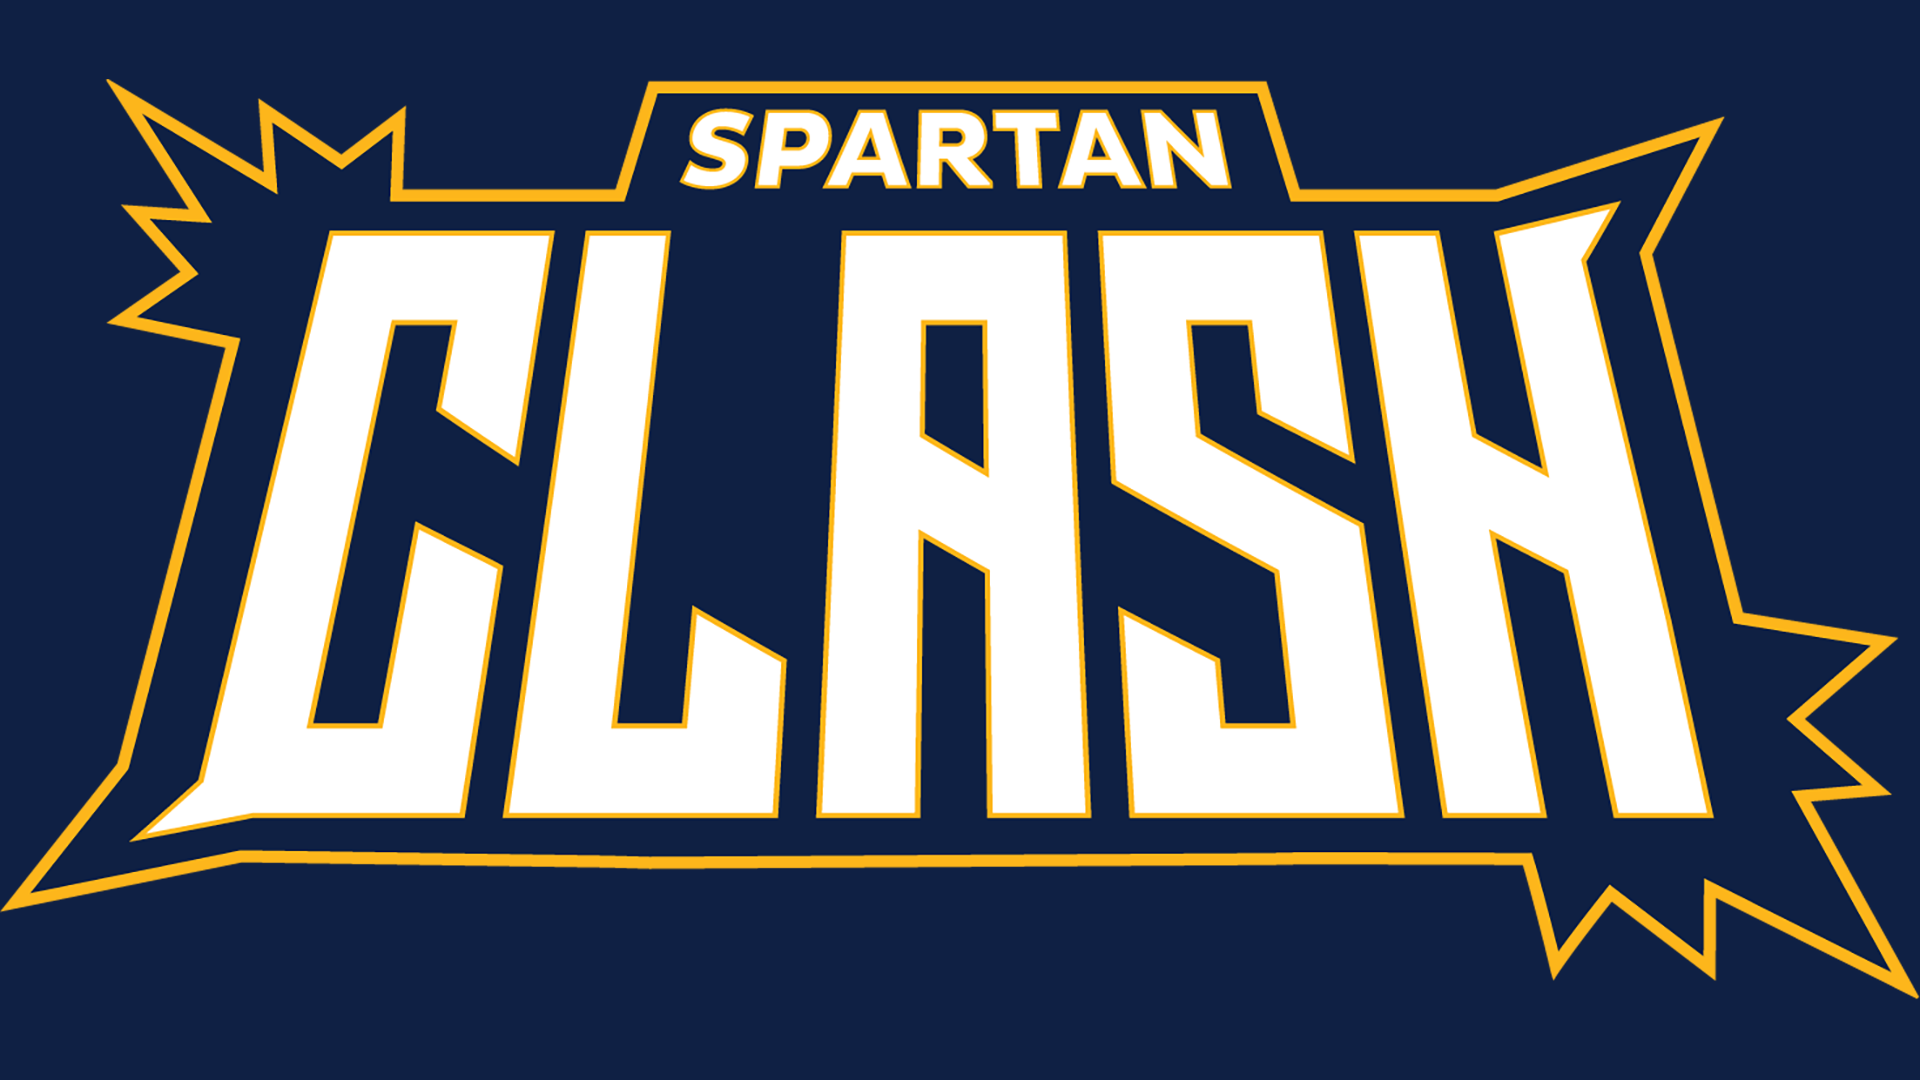 Spartan Clash tournament series logo